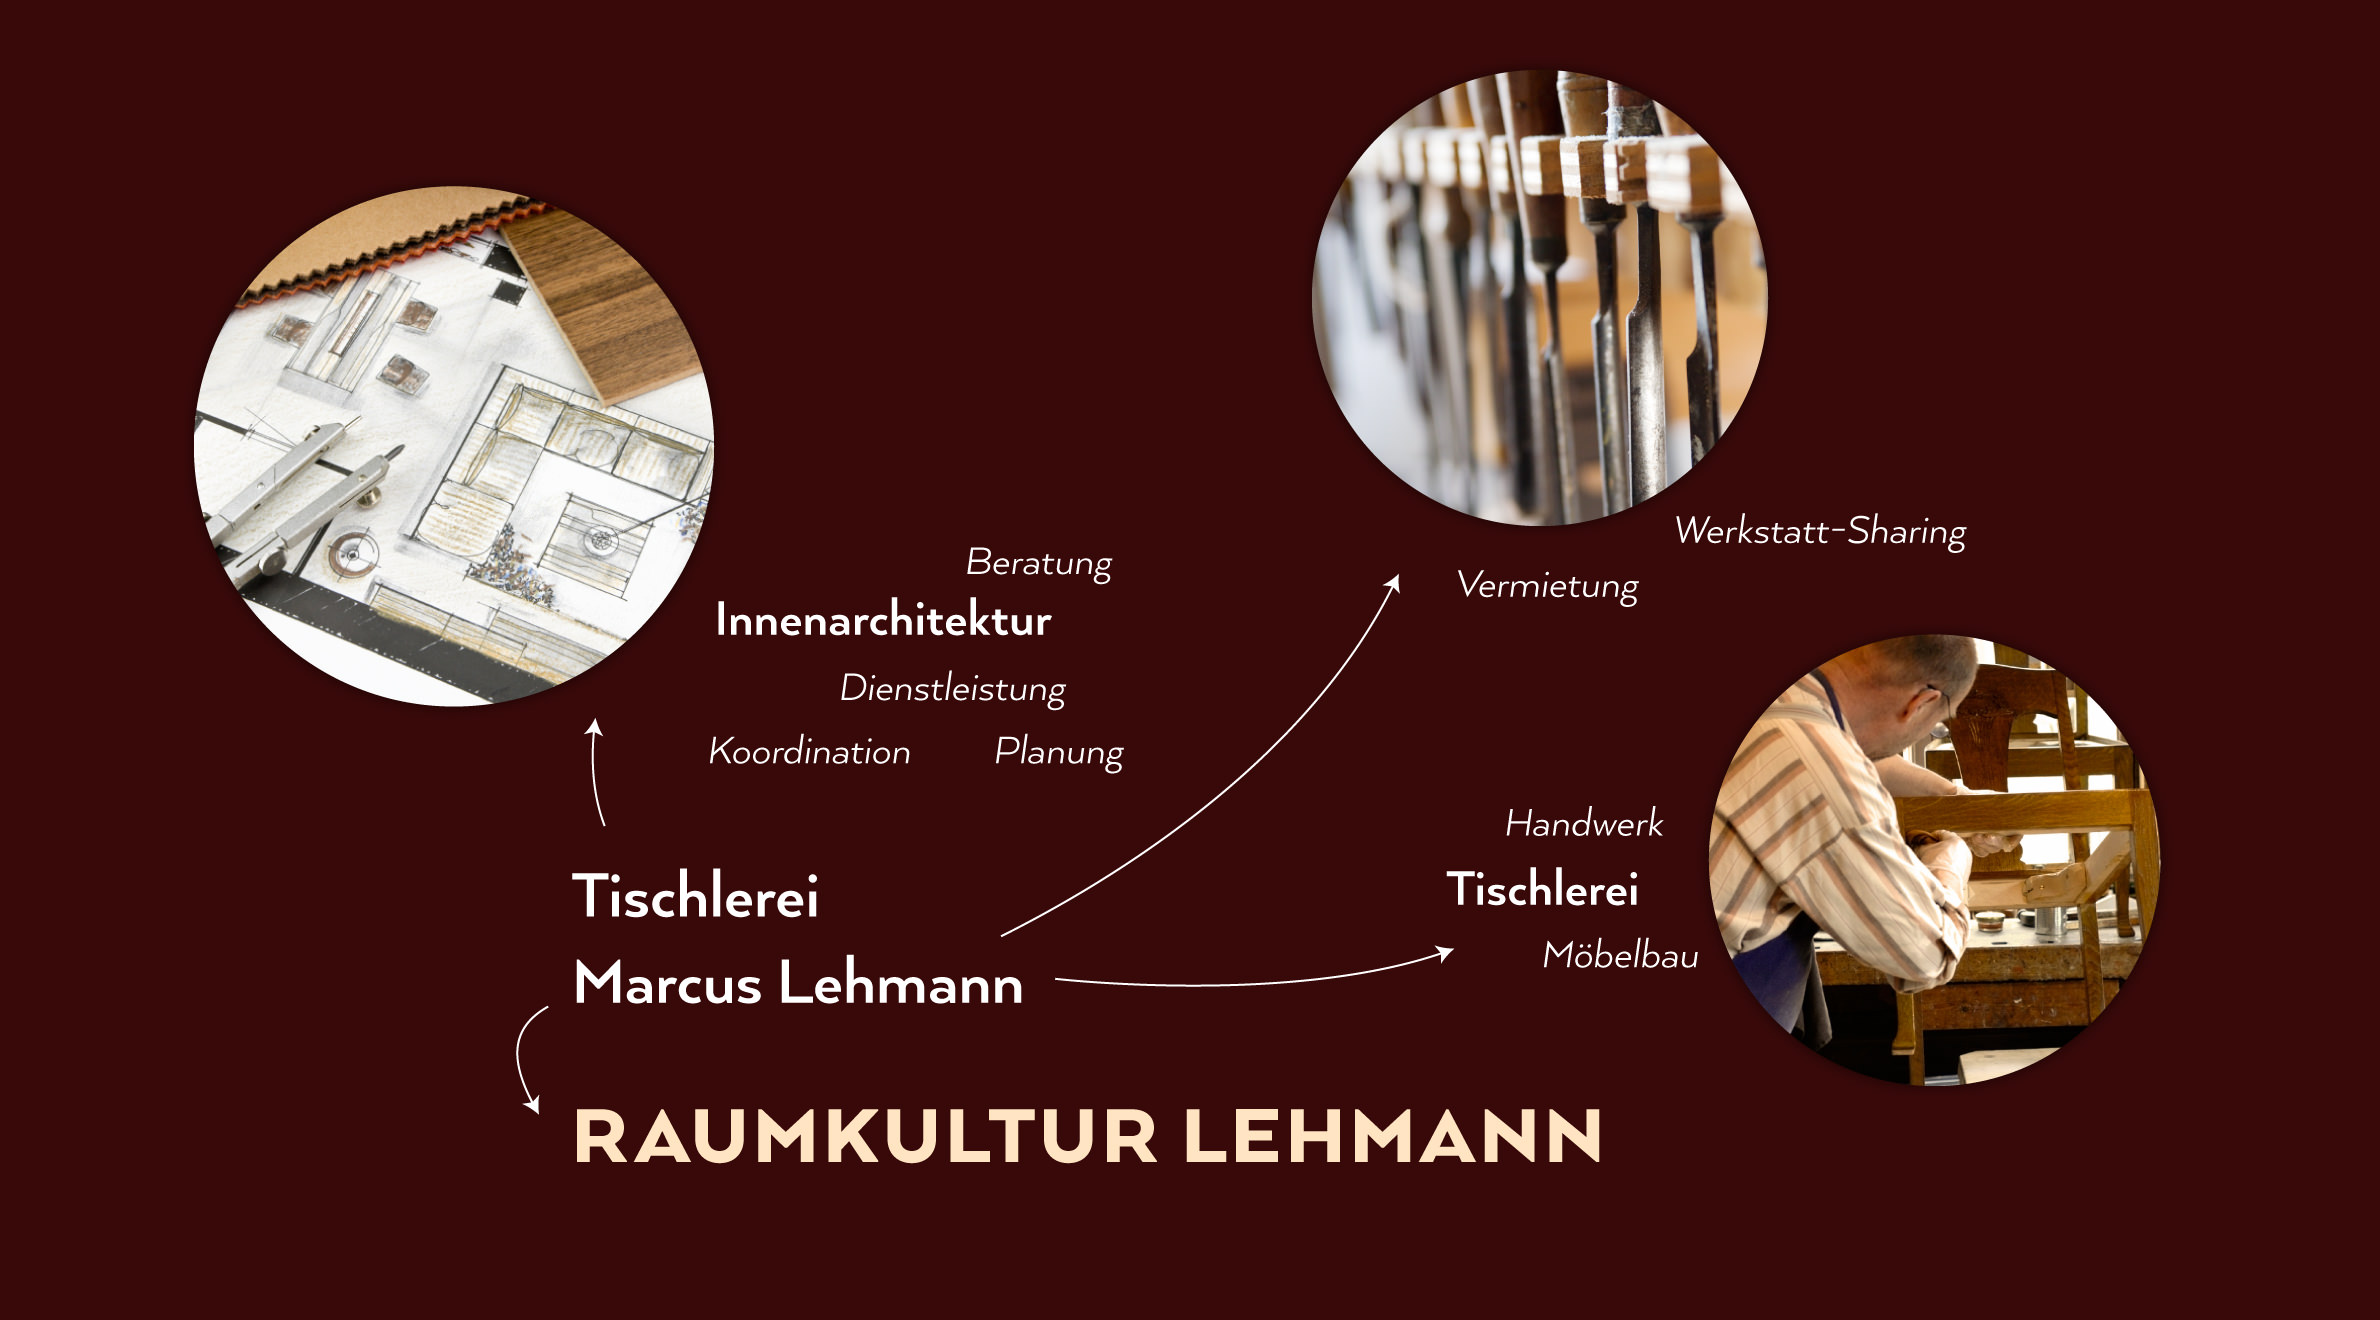 Raumkultur Lehmann, Naming